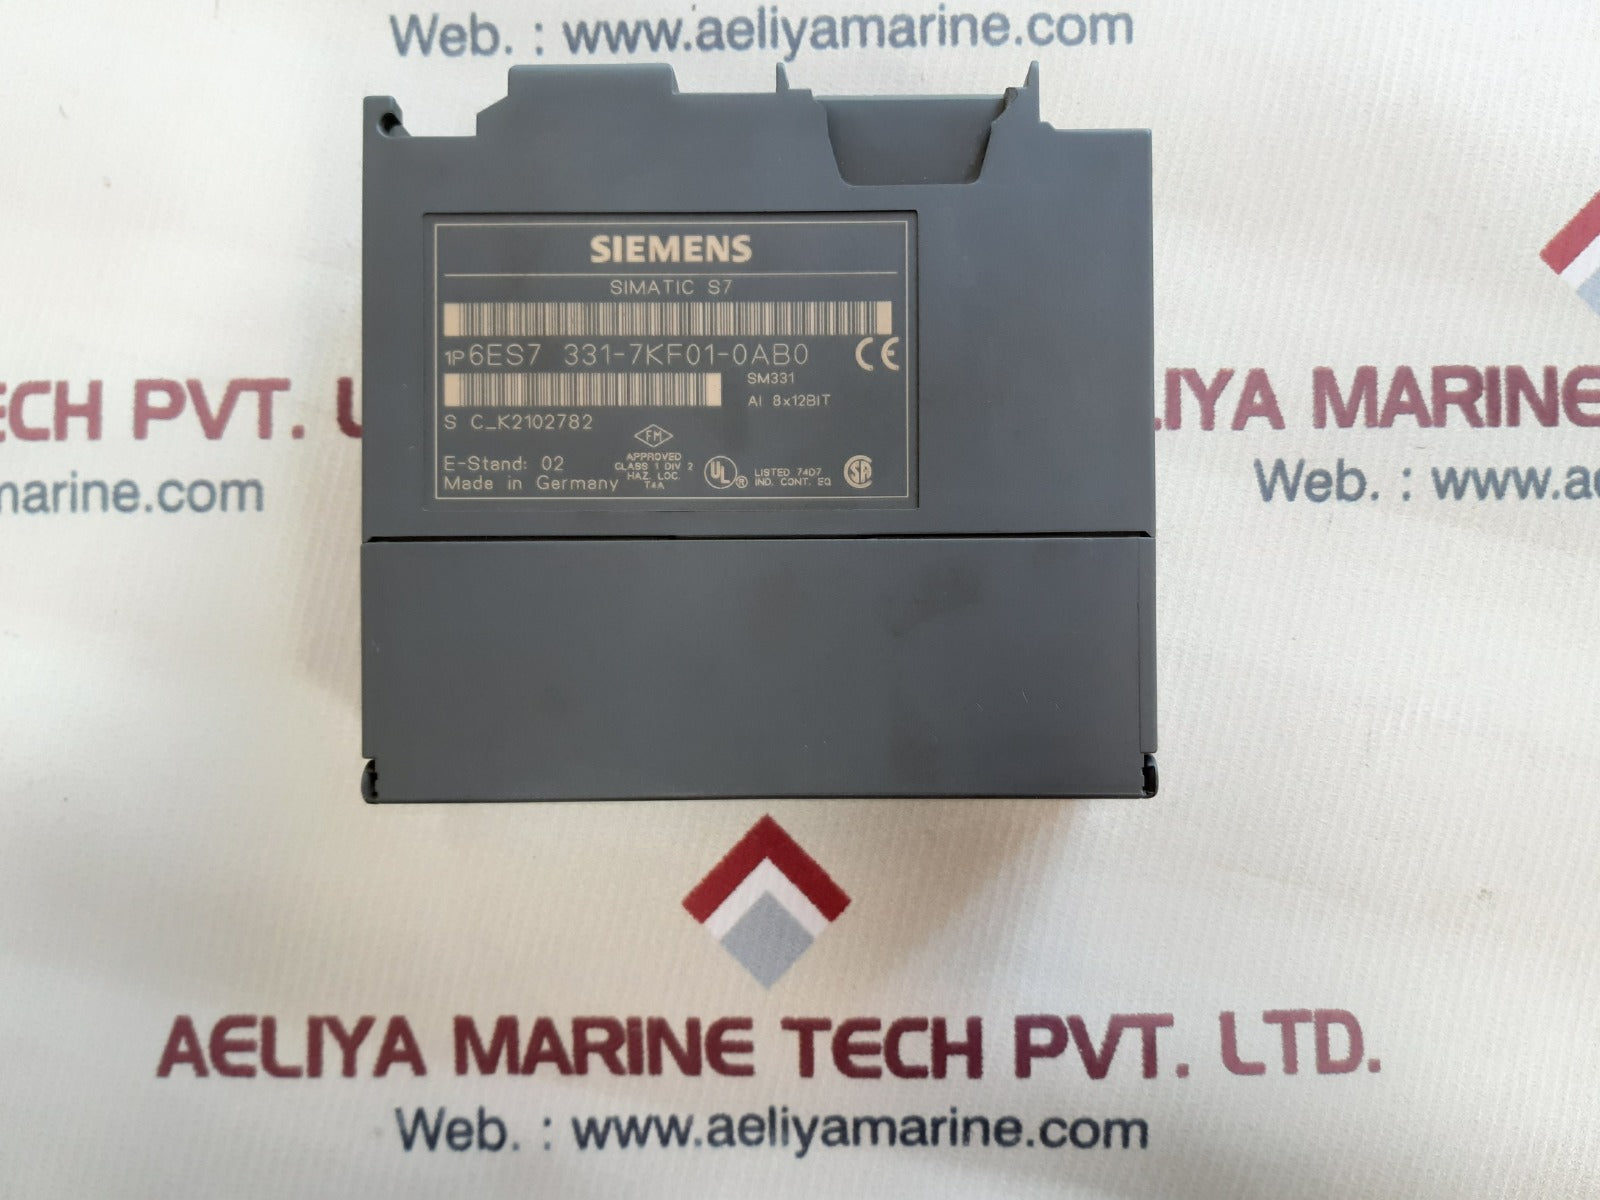 Siemens simatic s7 sm331 analog input module6es7 331-7kf01-0ab0 e-stand:02